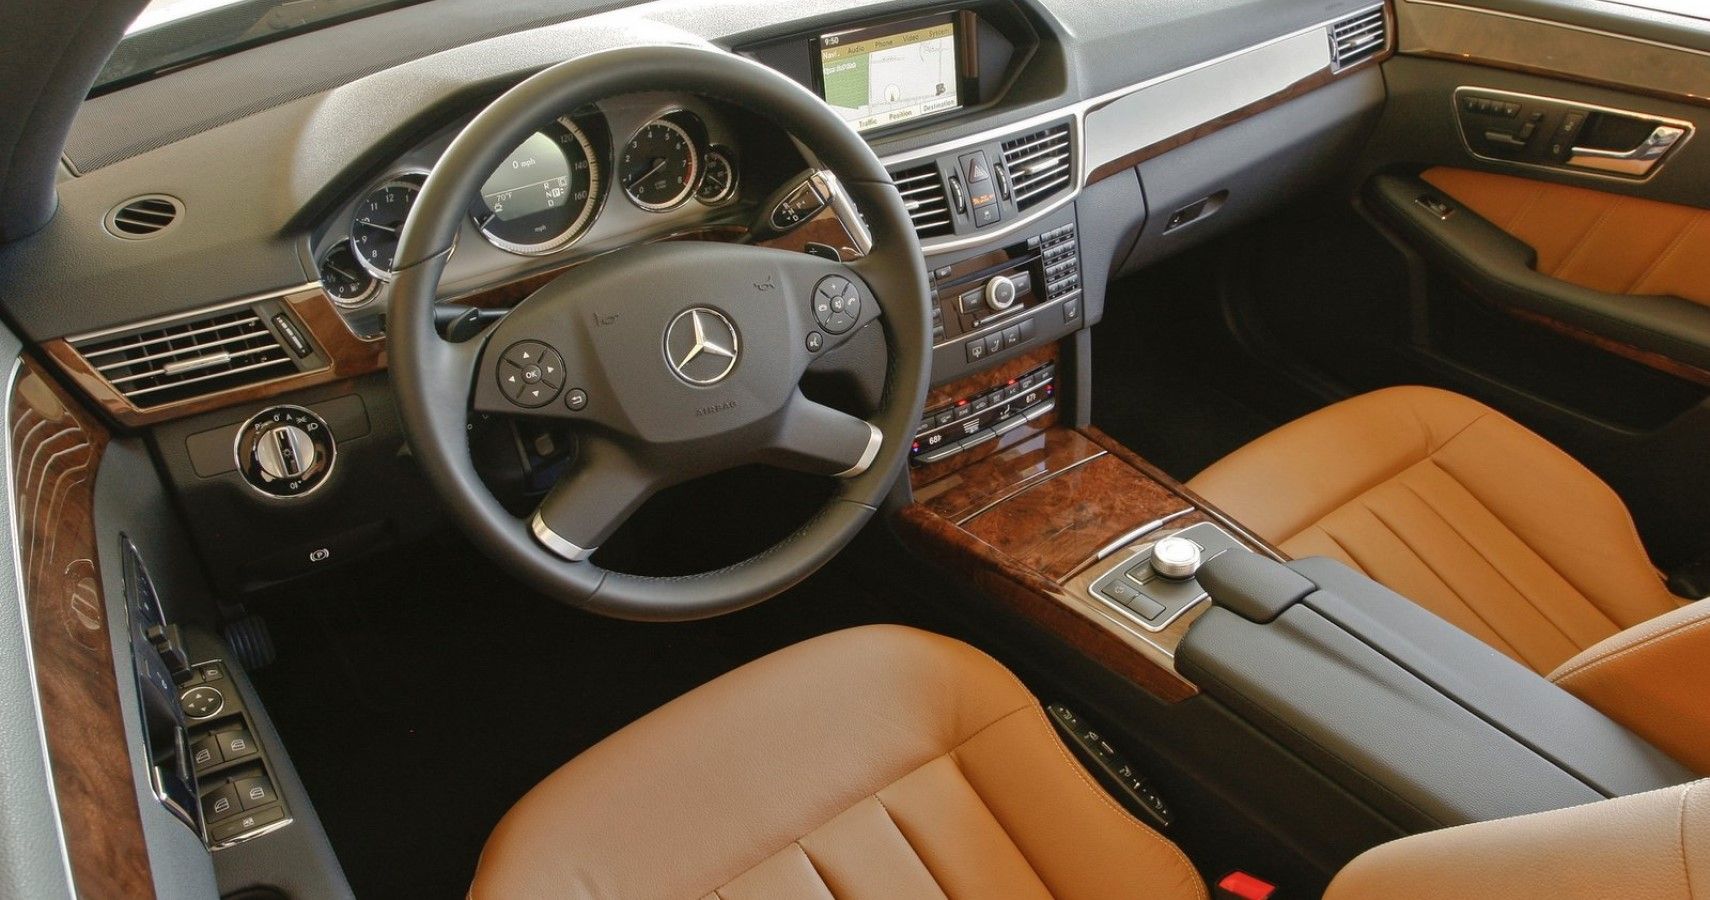 2010 Mercedes-Benz E-Class interior view